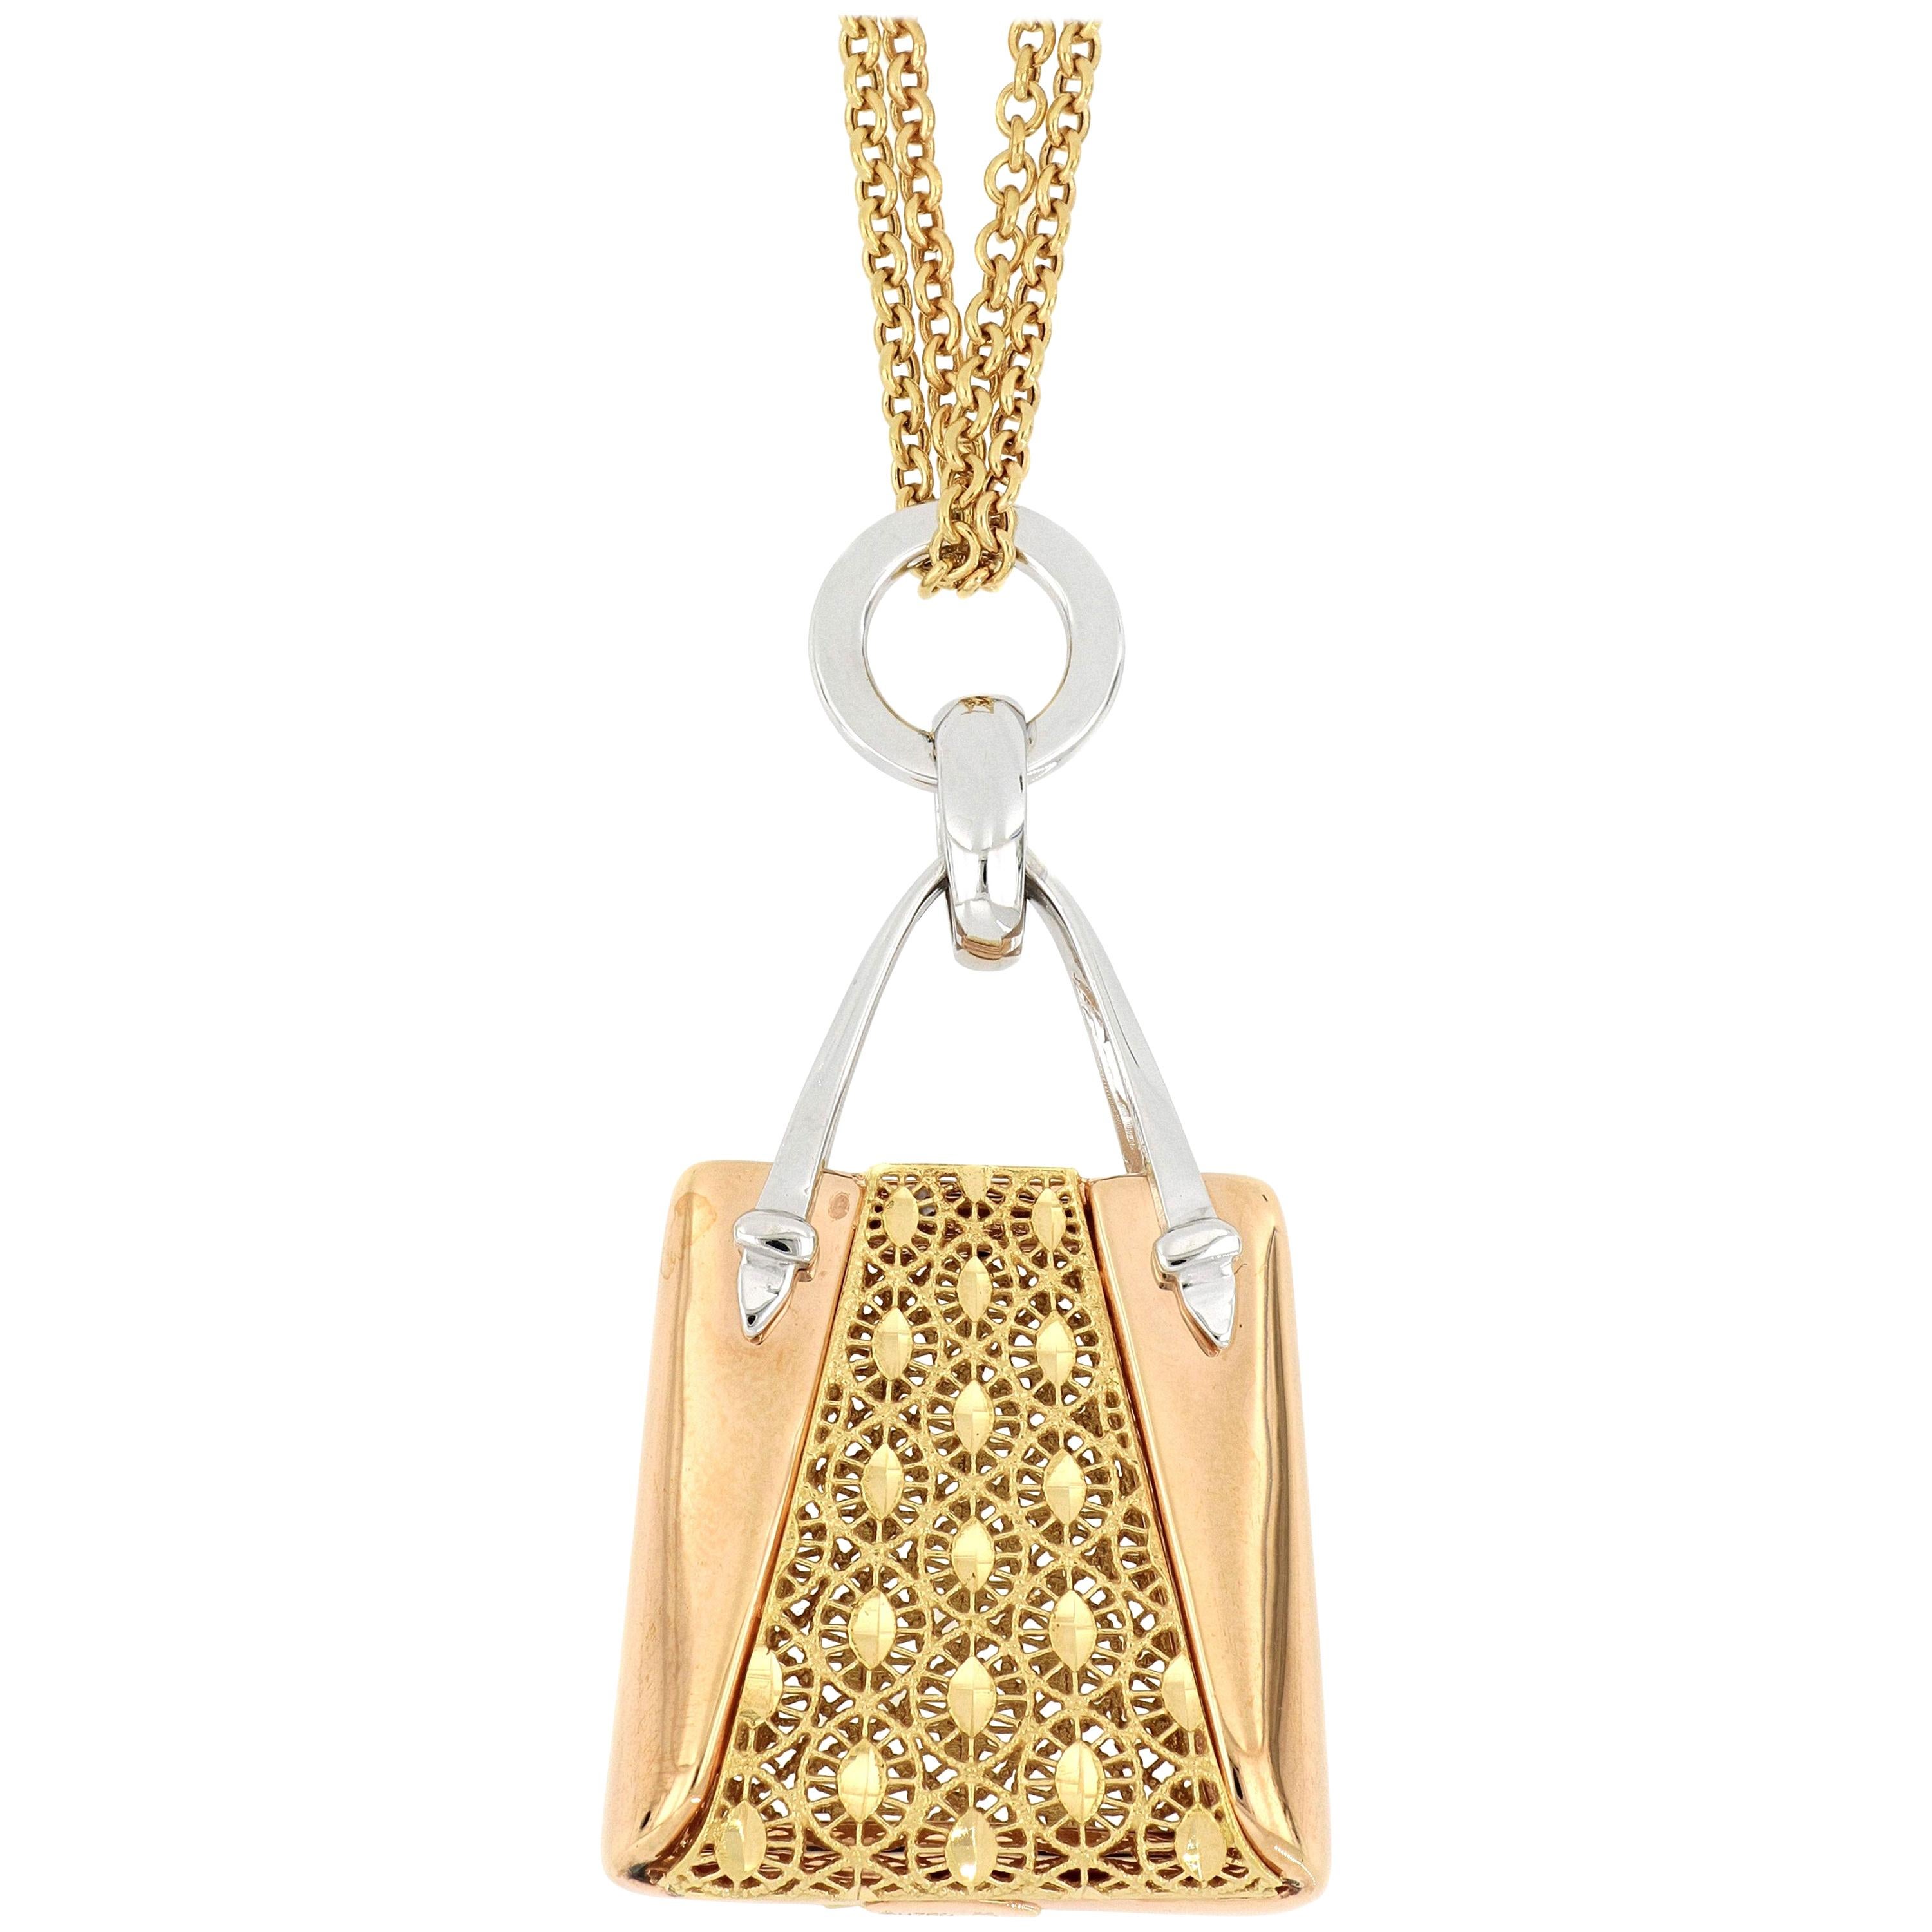 18 Karat Gold Handbag Pendant with Necklace